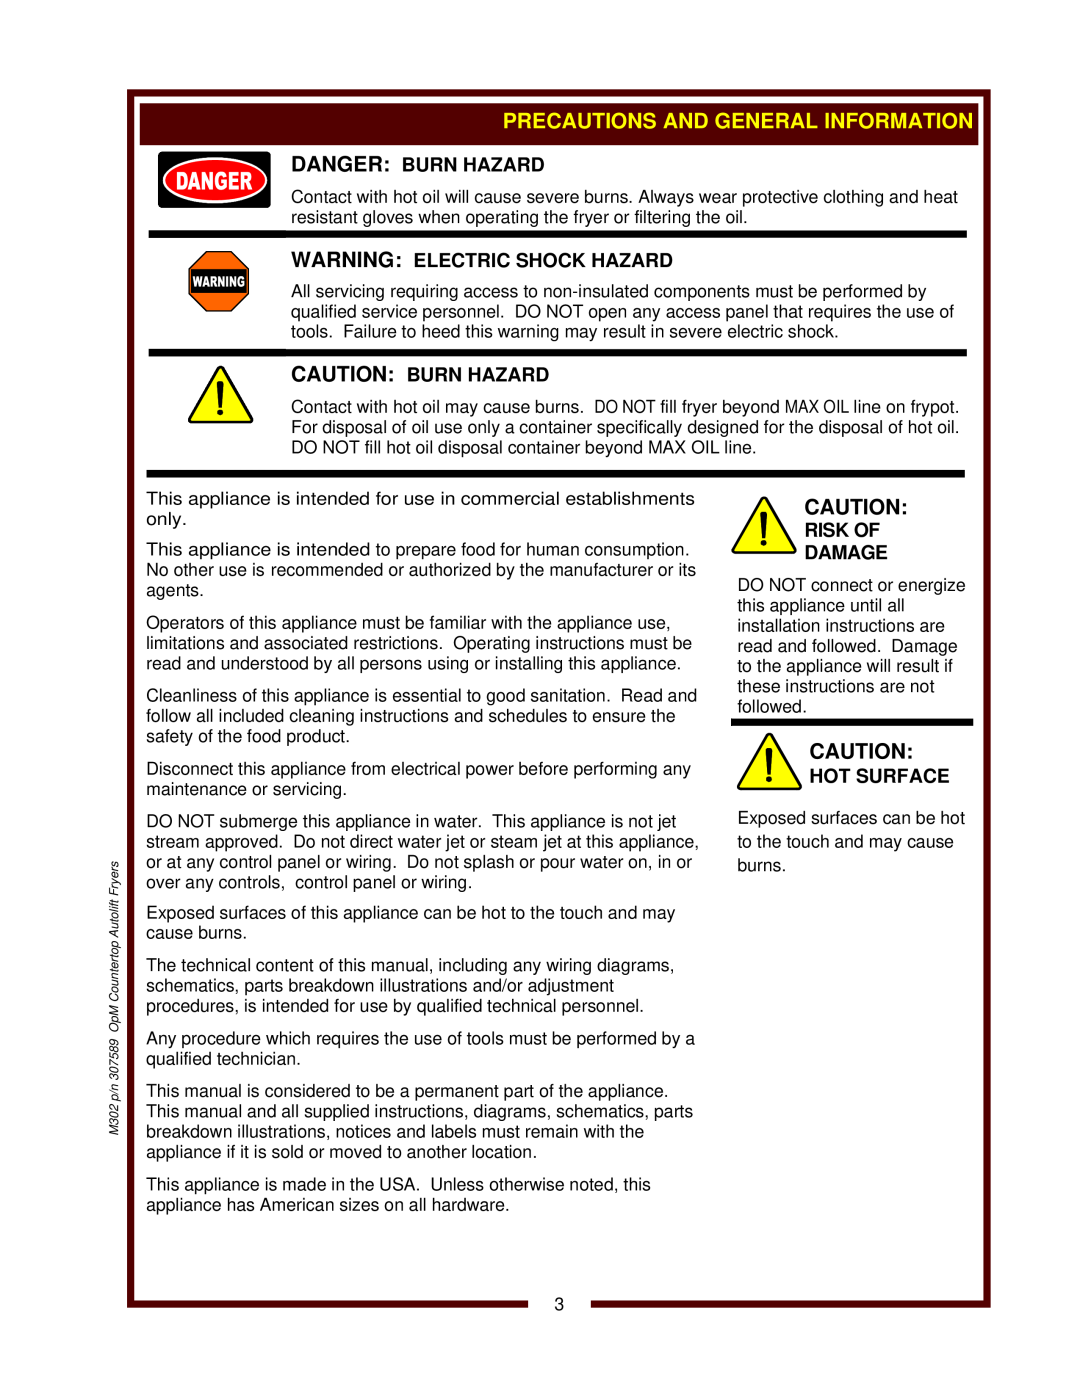 Wells F-88 Precautions And General Information, Danger Burn Hazard, Warning Electric Shock Hazard, Caution Burn Hazard 